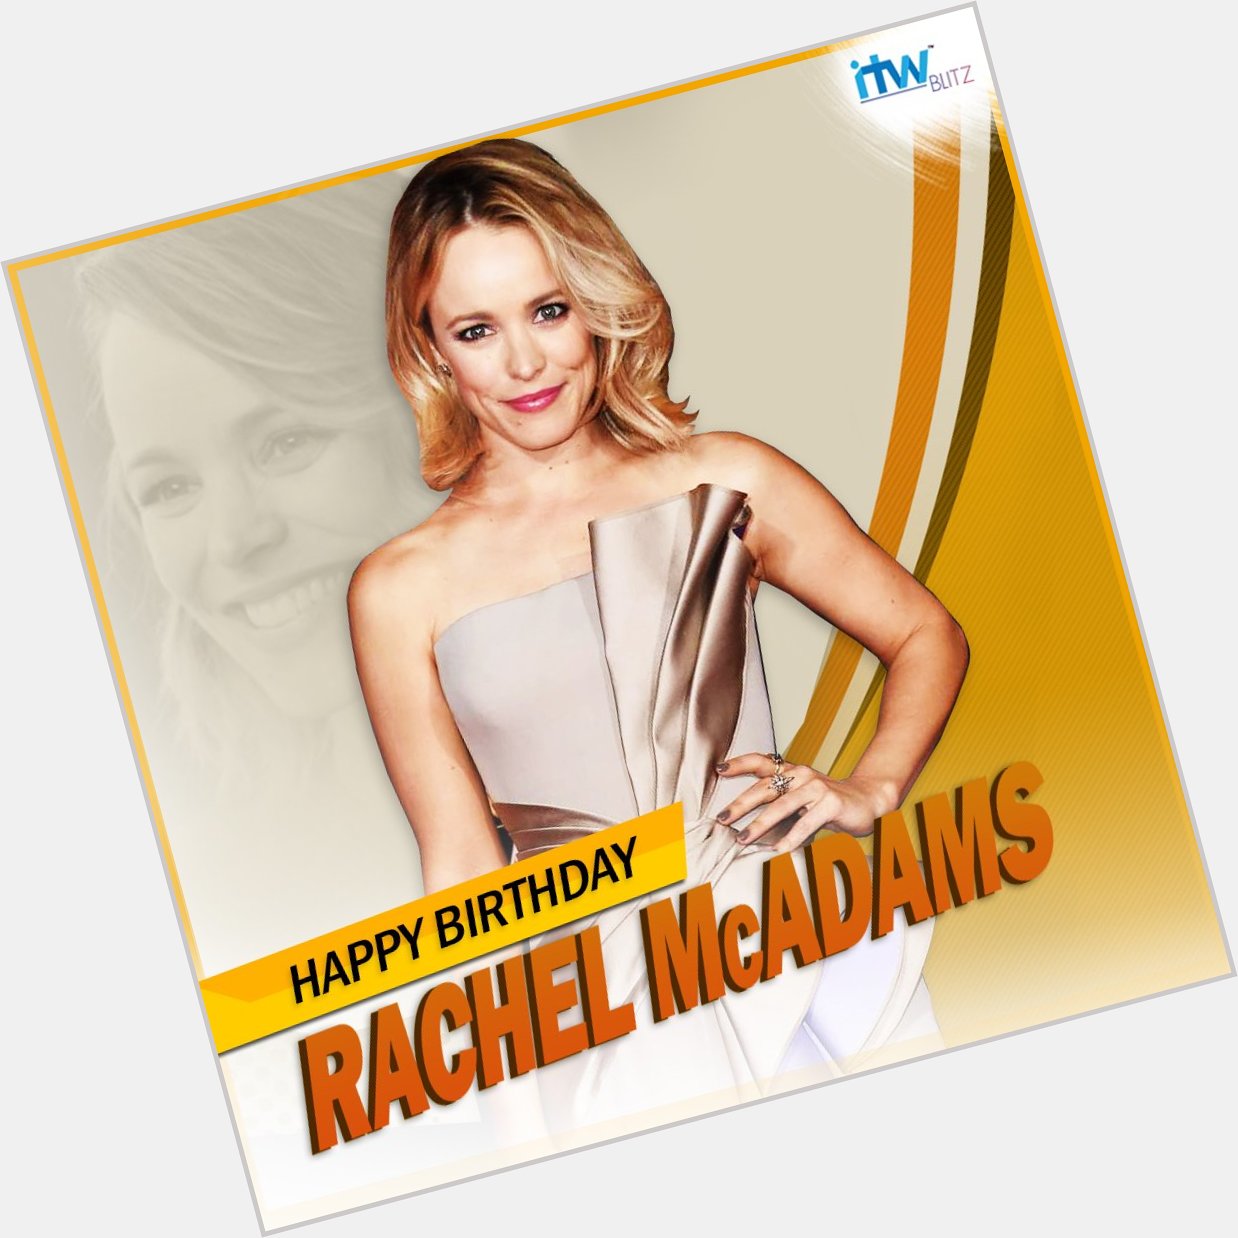 Wishing the \Notebook\ actress Rachel McAdams a very happy birthday!   